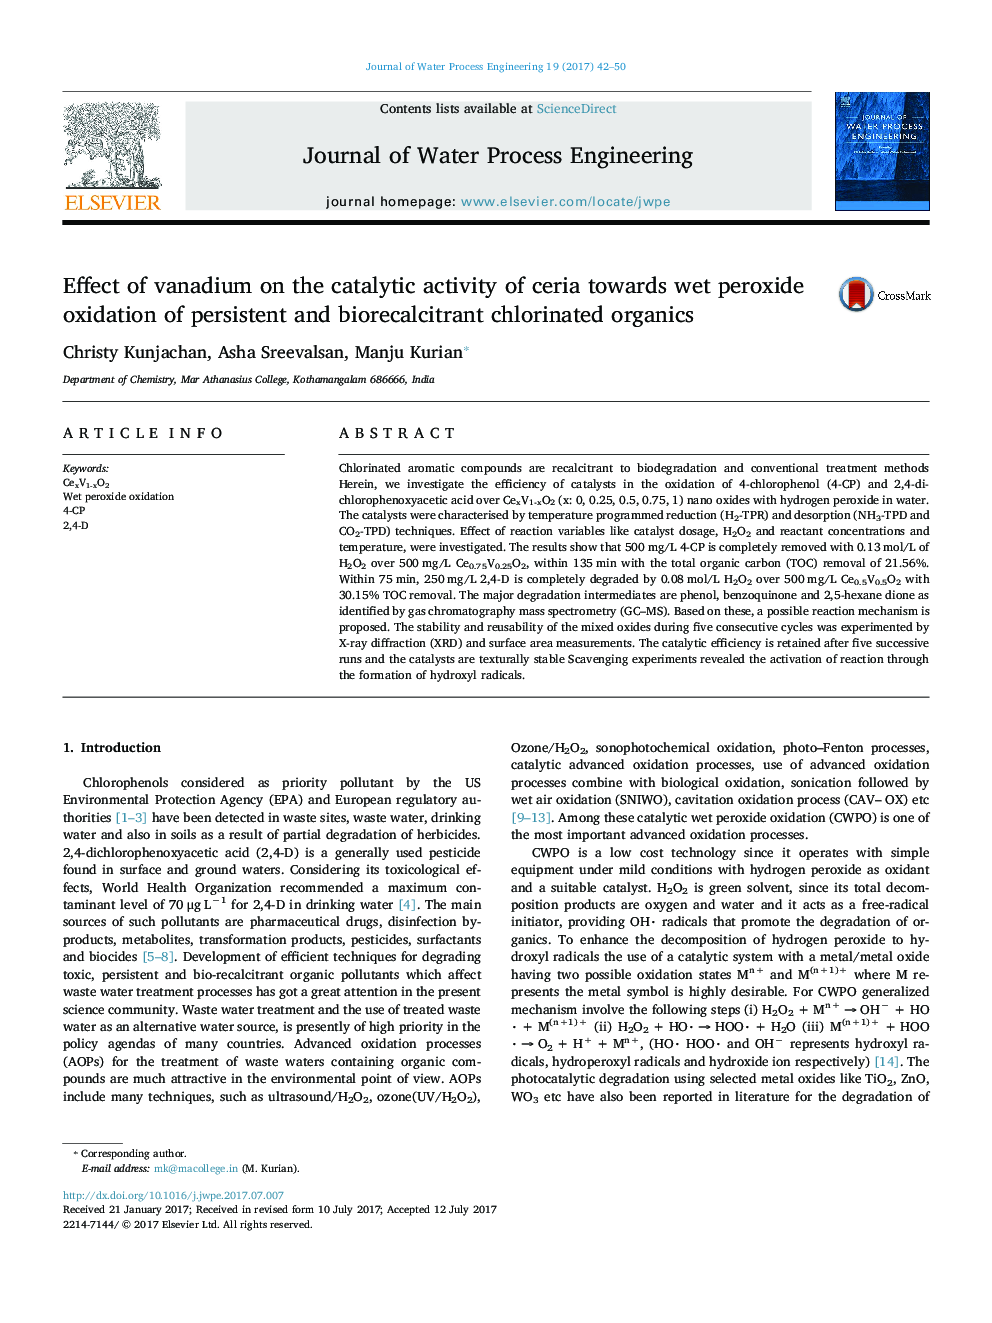 Effect of vanadium on the catalytic activity of ceria towards wet peroxide oxidation of persistent and biorecalcitrant chlorinated organics